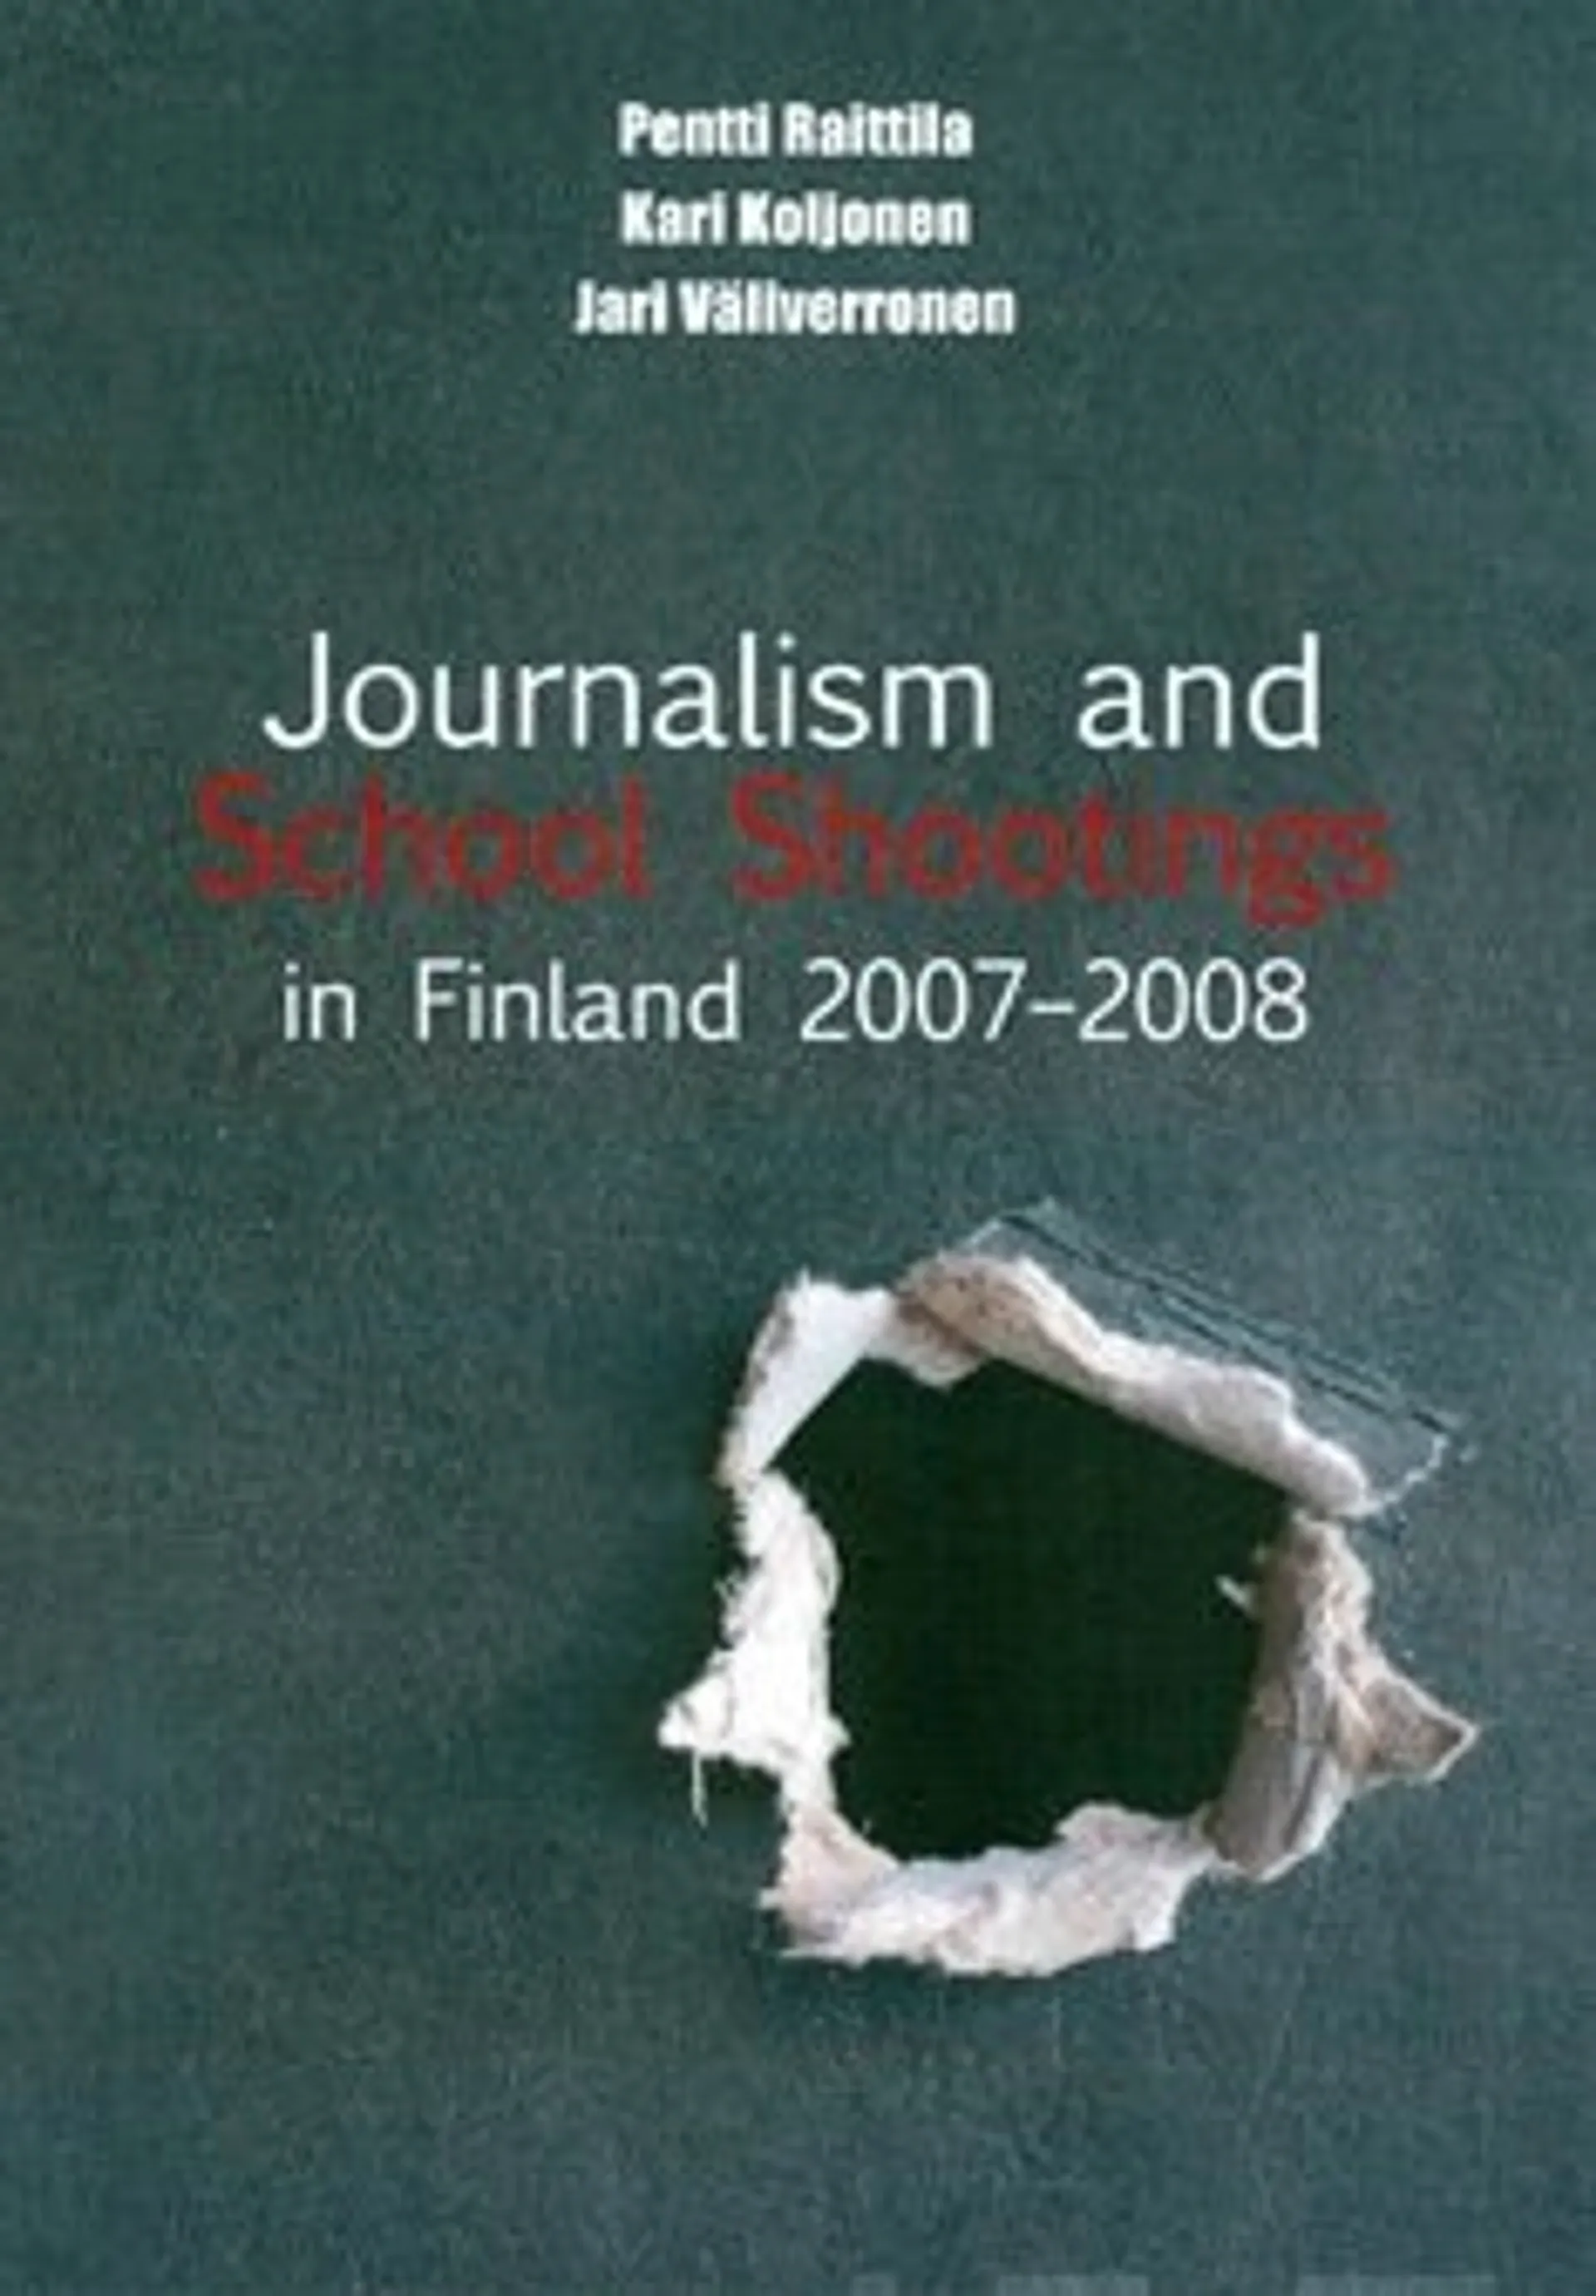 Journalism and School Shootings in Finland 2007-2008